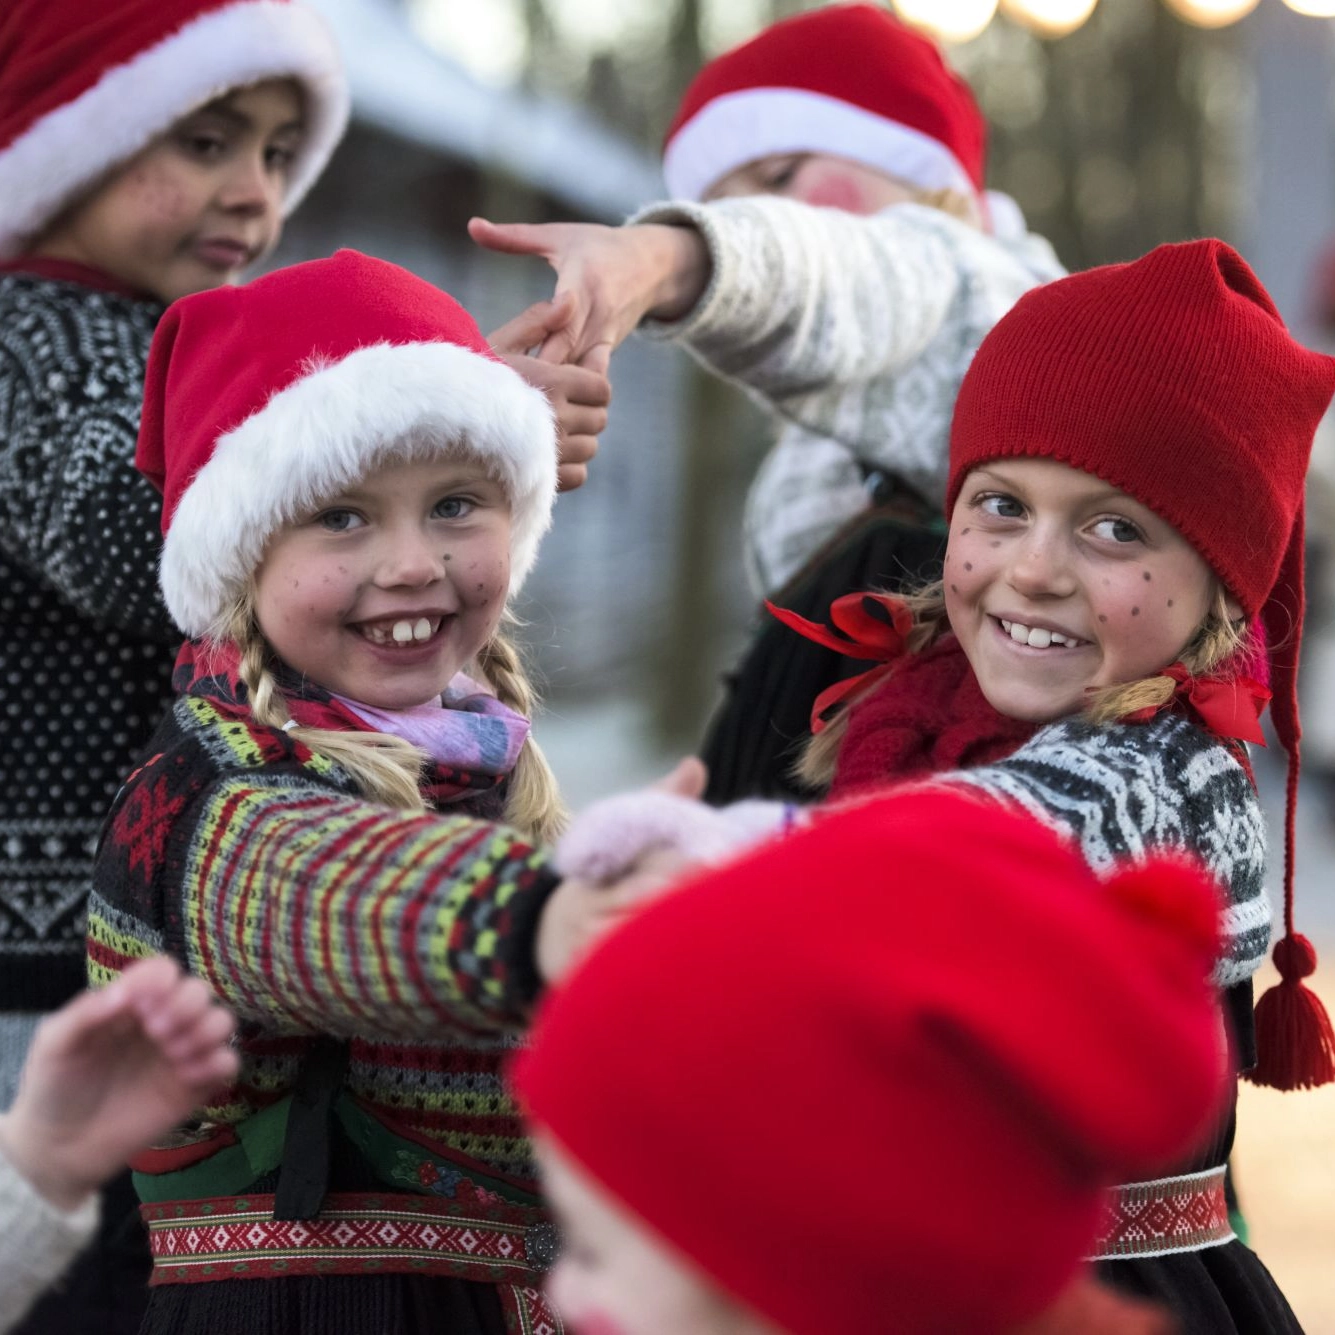 Little Santas dancing in the market - Oslo- Norway